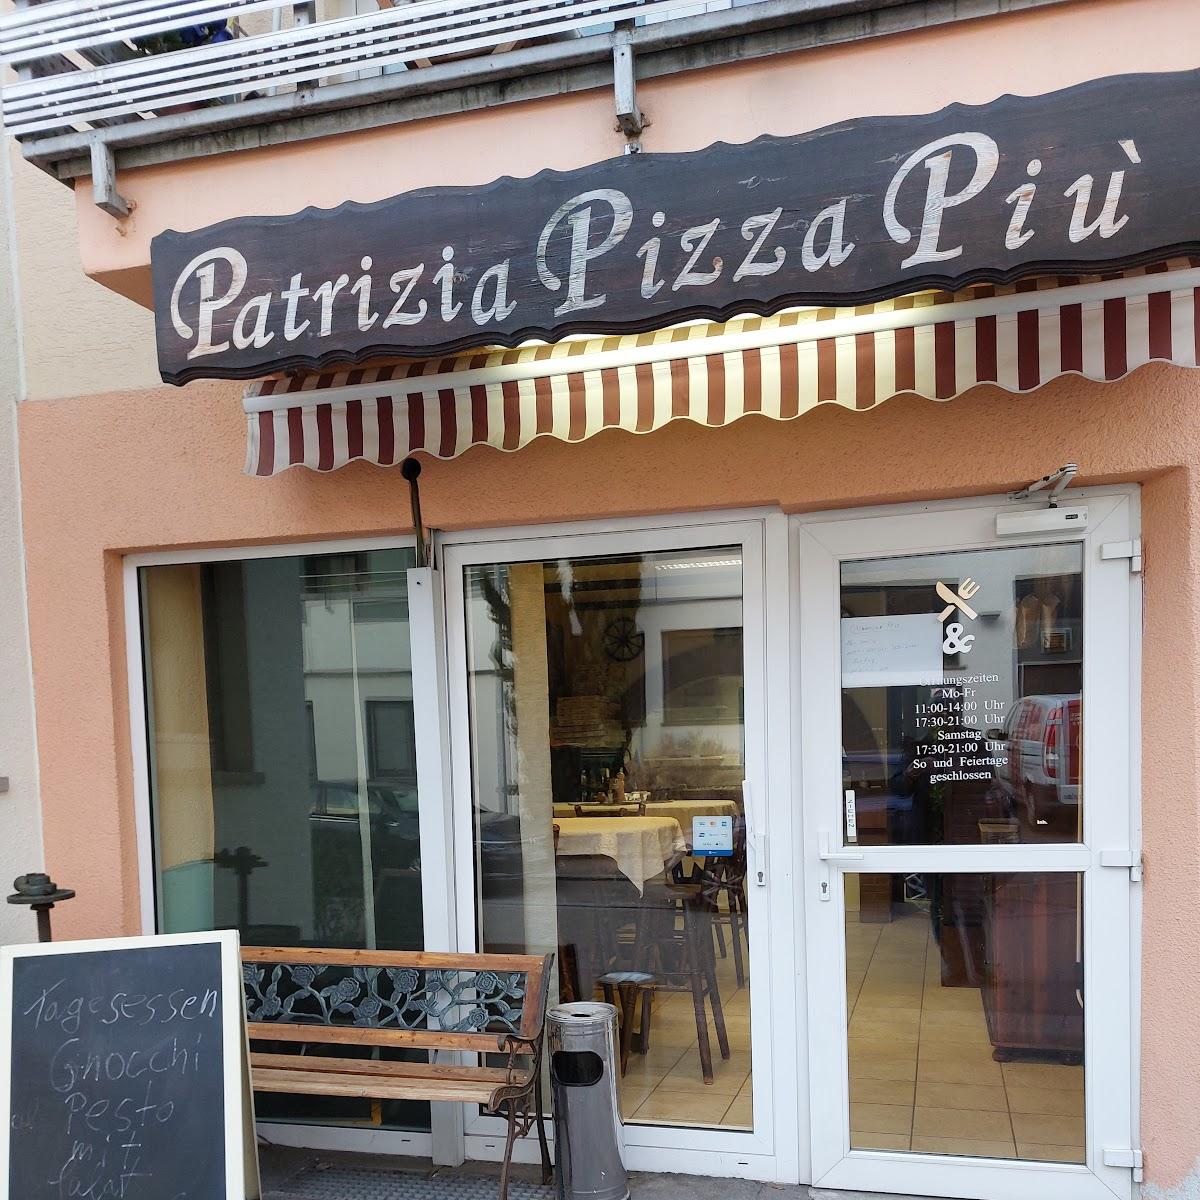 Restaurant "Patrizia Pizza" in Ditzingen